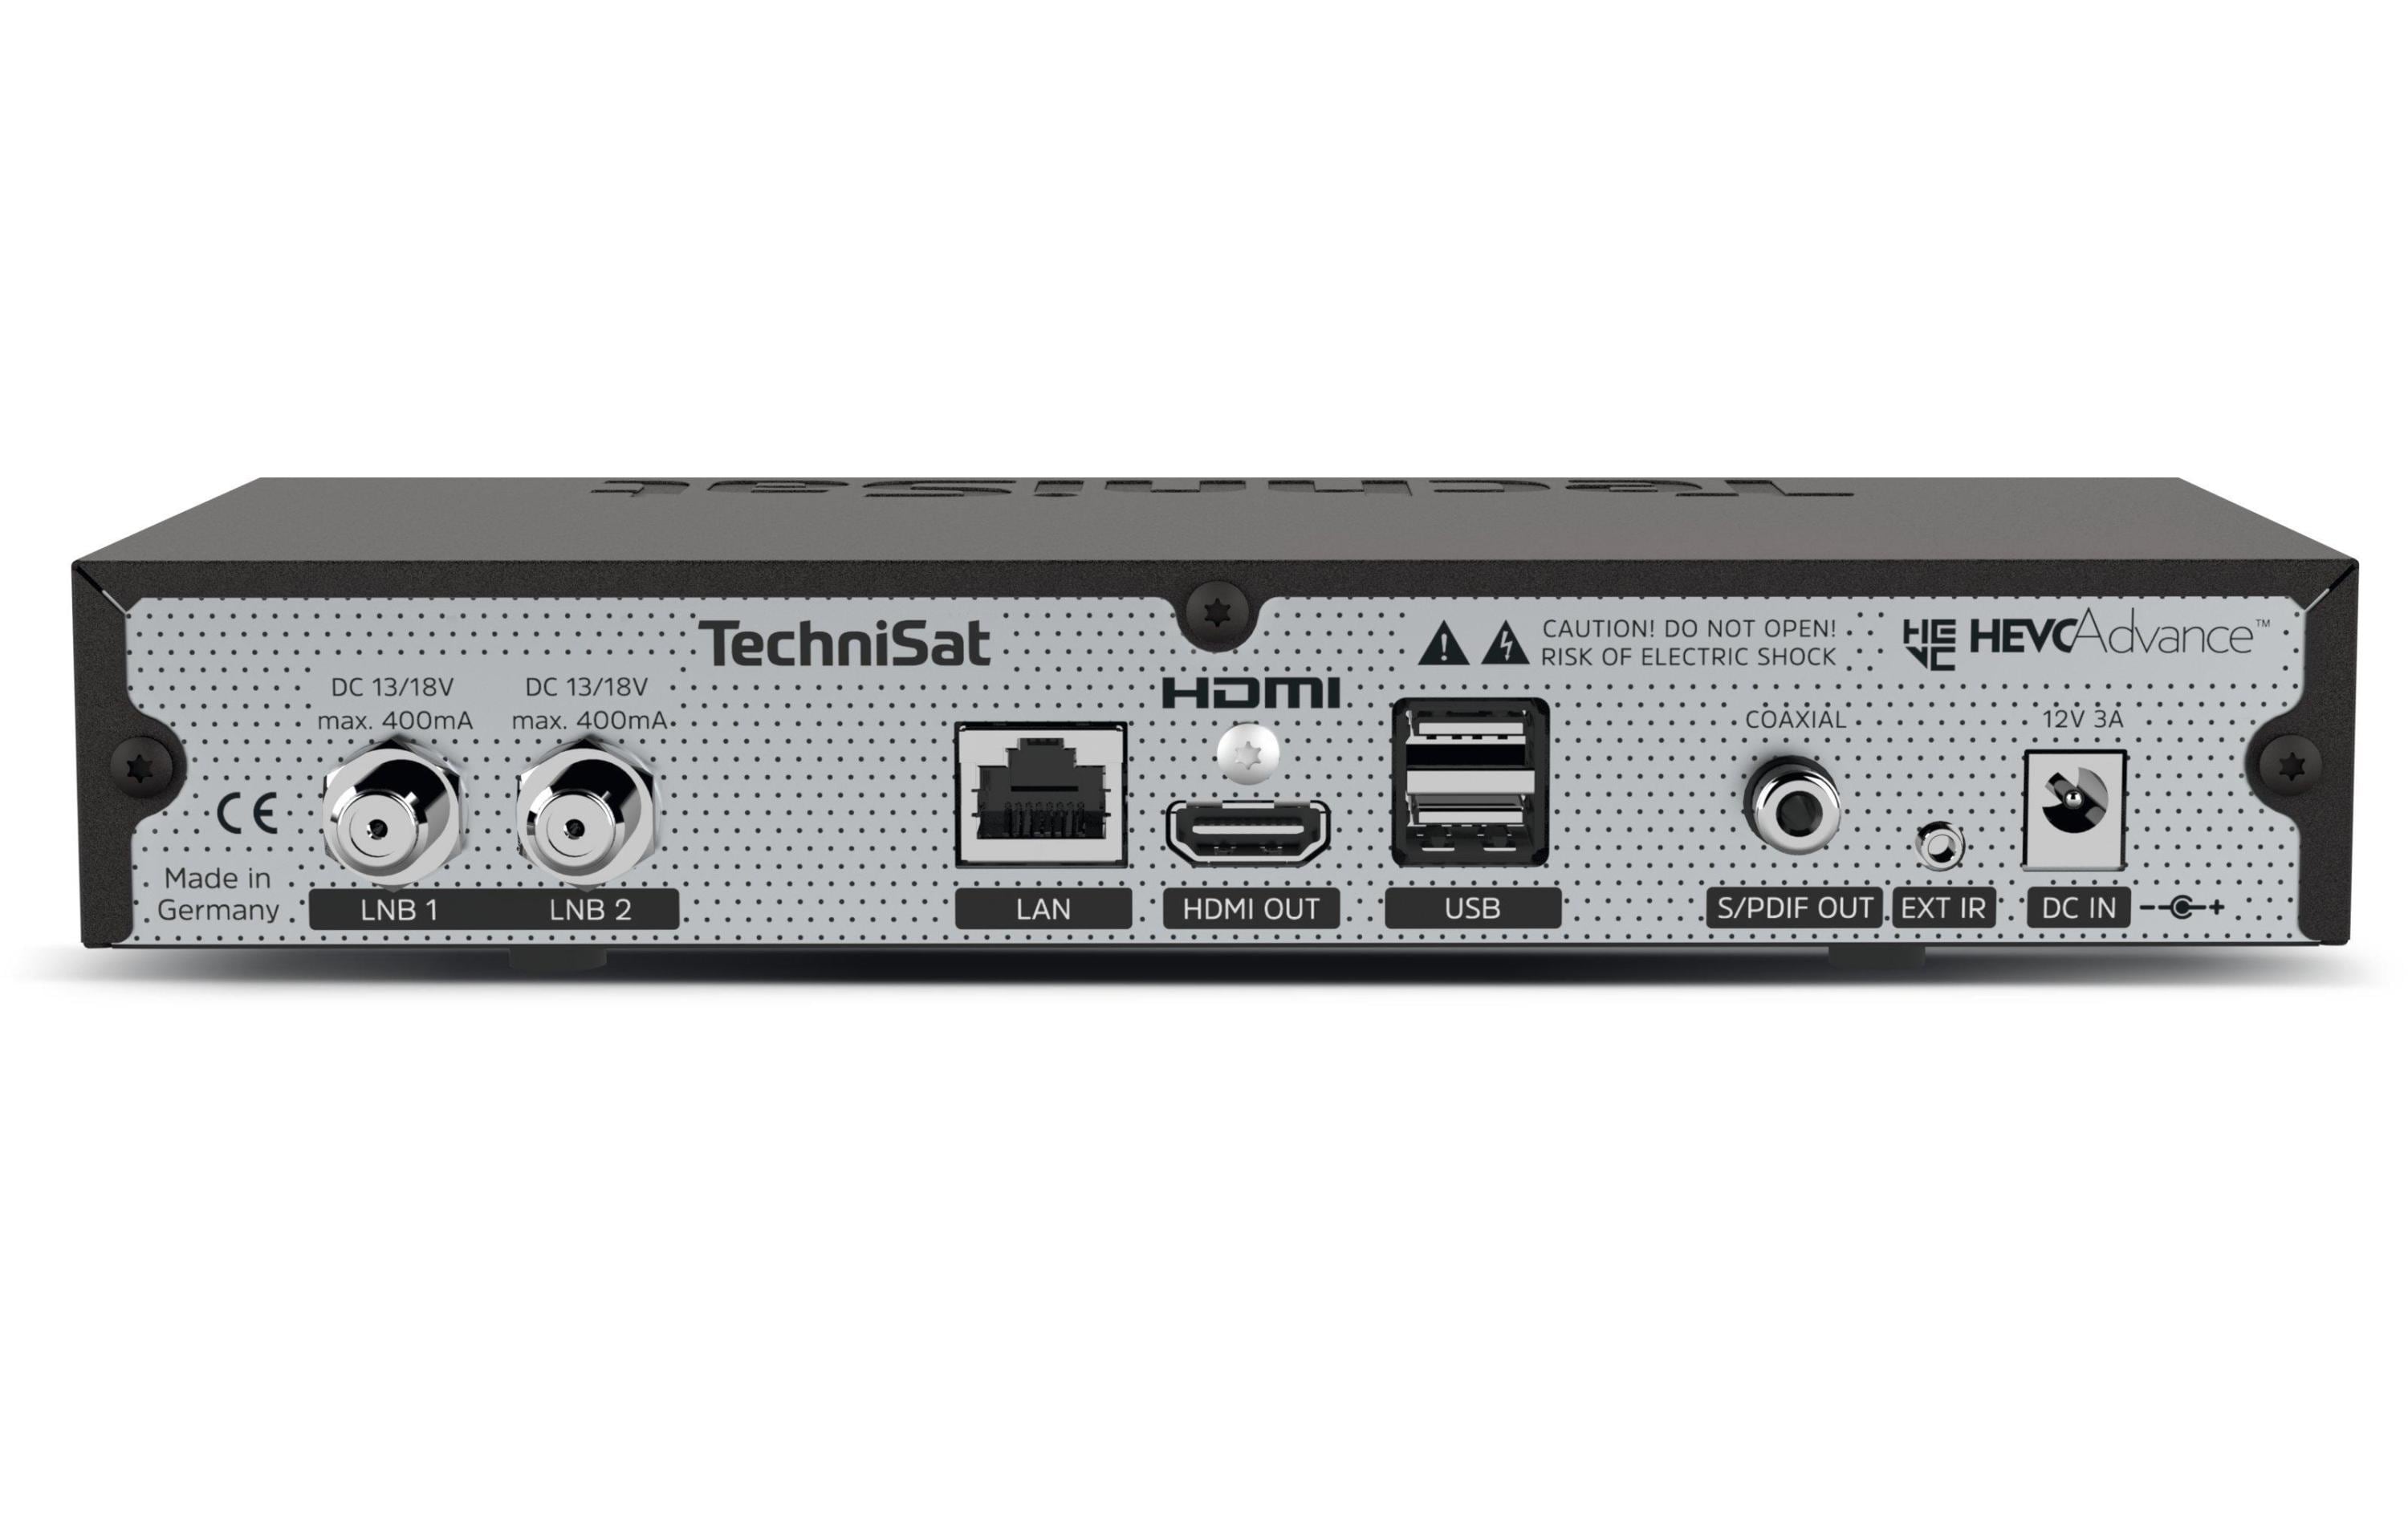 Technisat SAT-Receiver Technibox UHD S